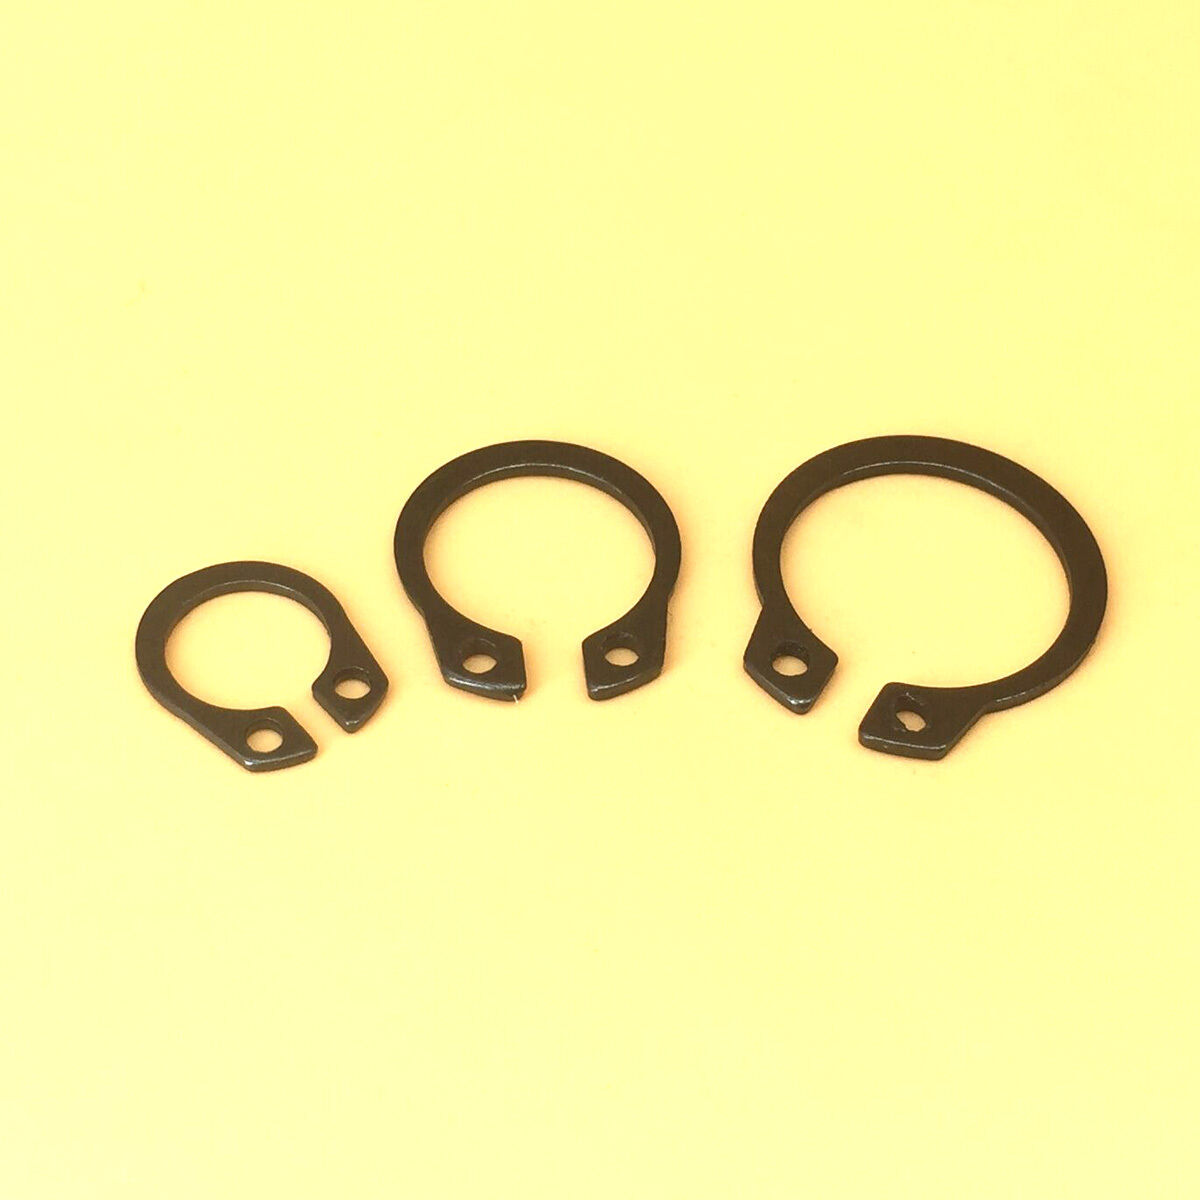 15 Kinds of Steel External Circlip Retaining Ring Snap Ring Assortment Kit